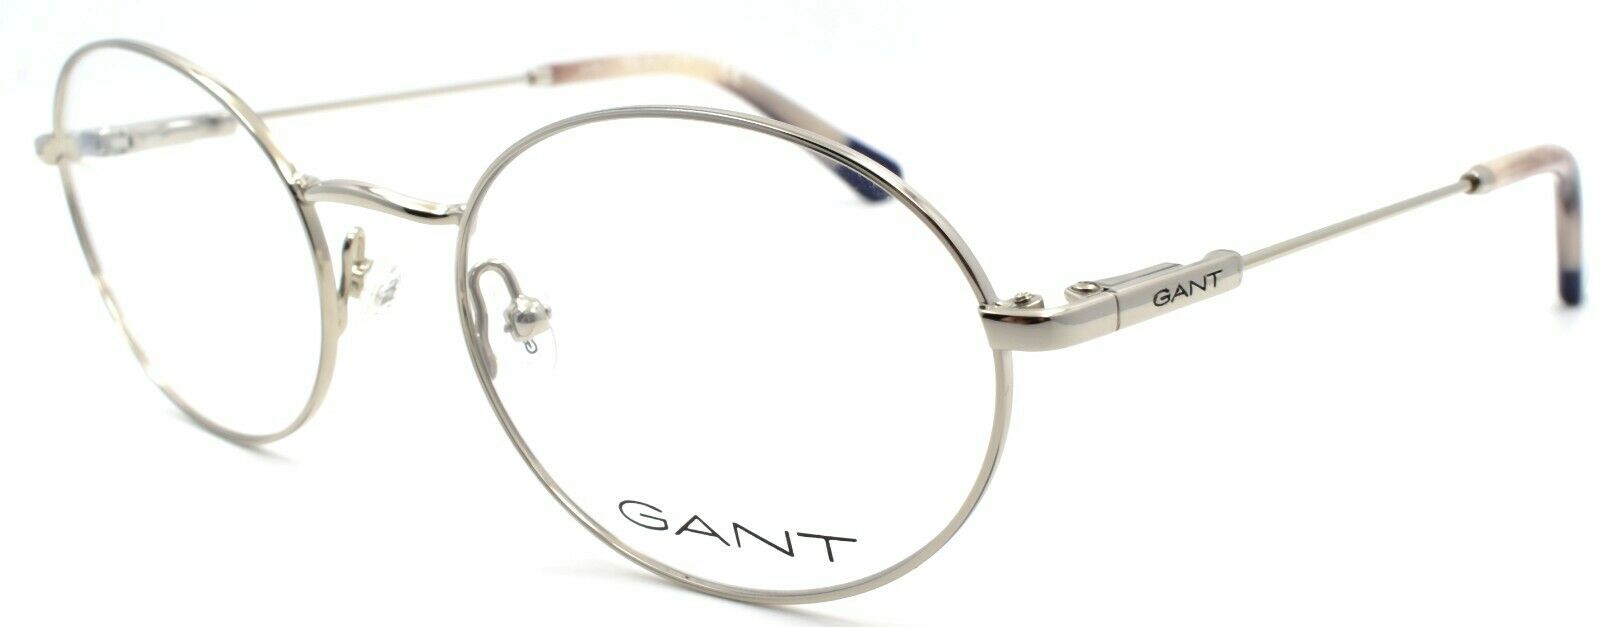 1-GANT GA3187 010 Unisex Eyeglasses Frames 51-19-140 Shiny Light Nickeltin-889214048318-IKSpecs